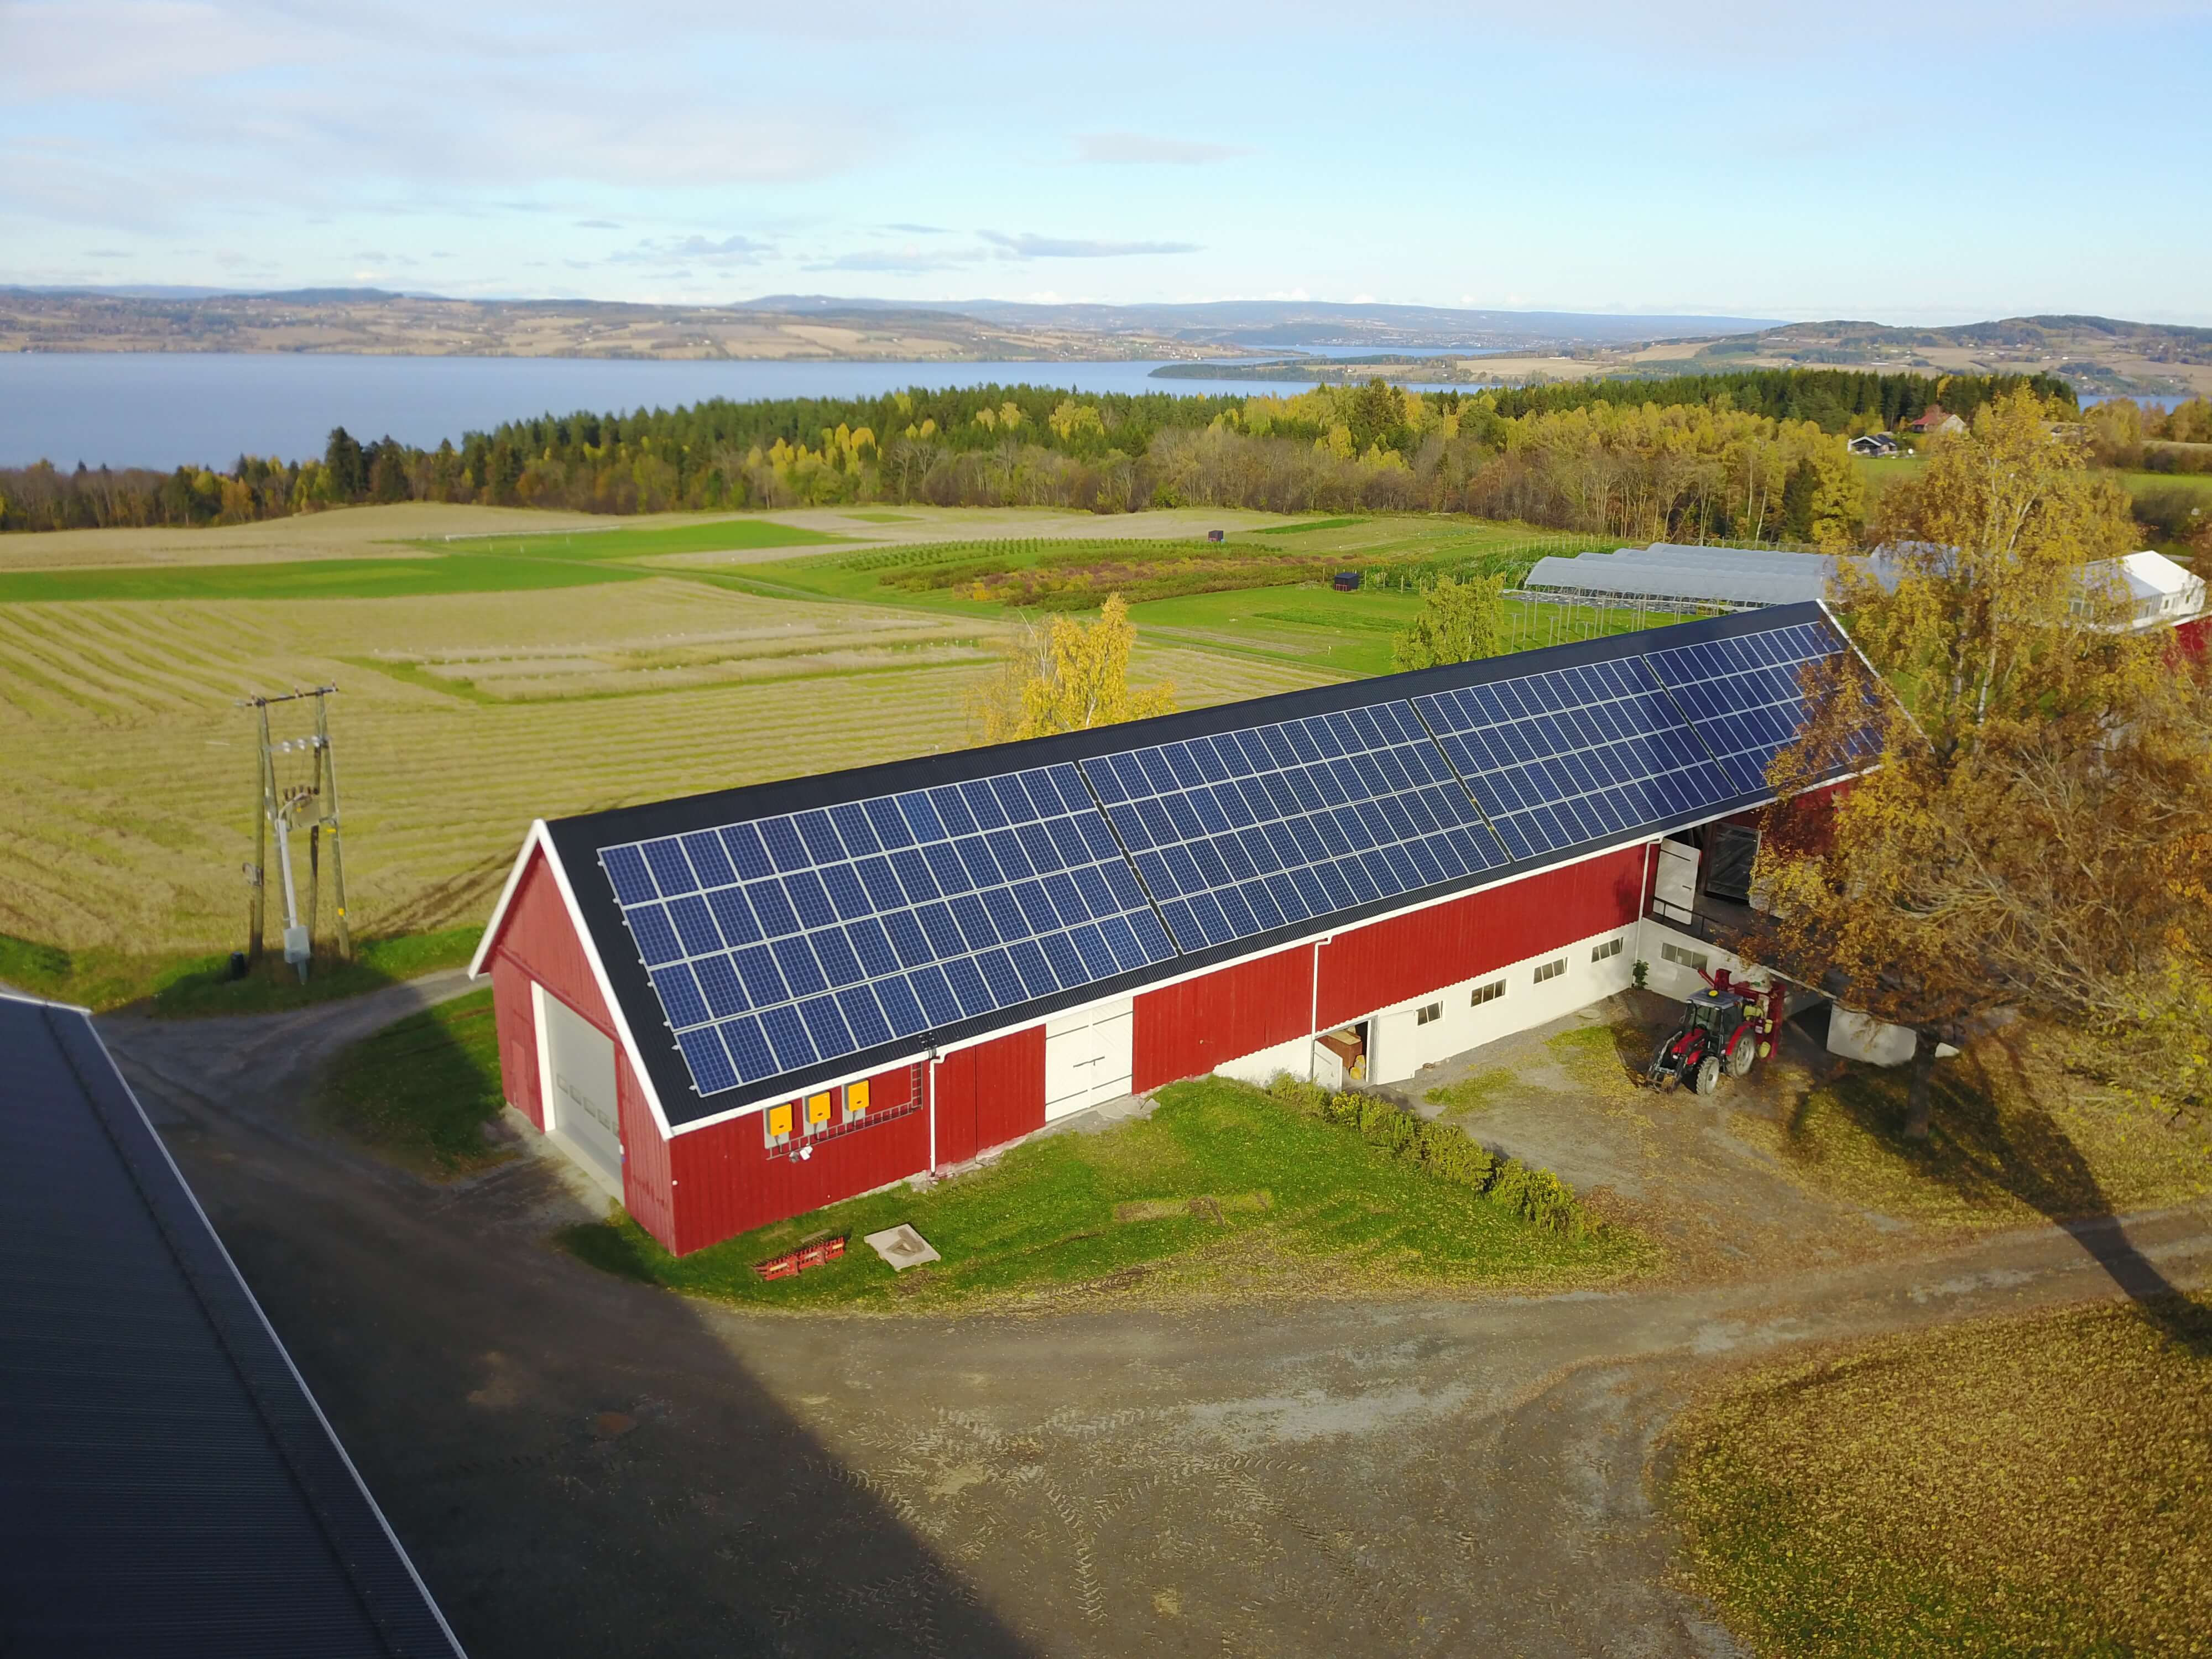 Solar panels on the barn roof